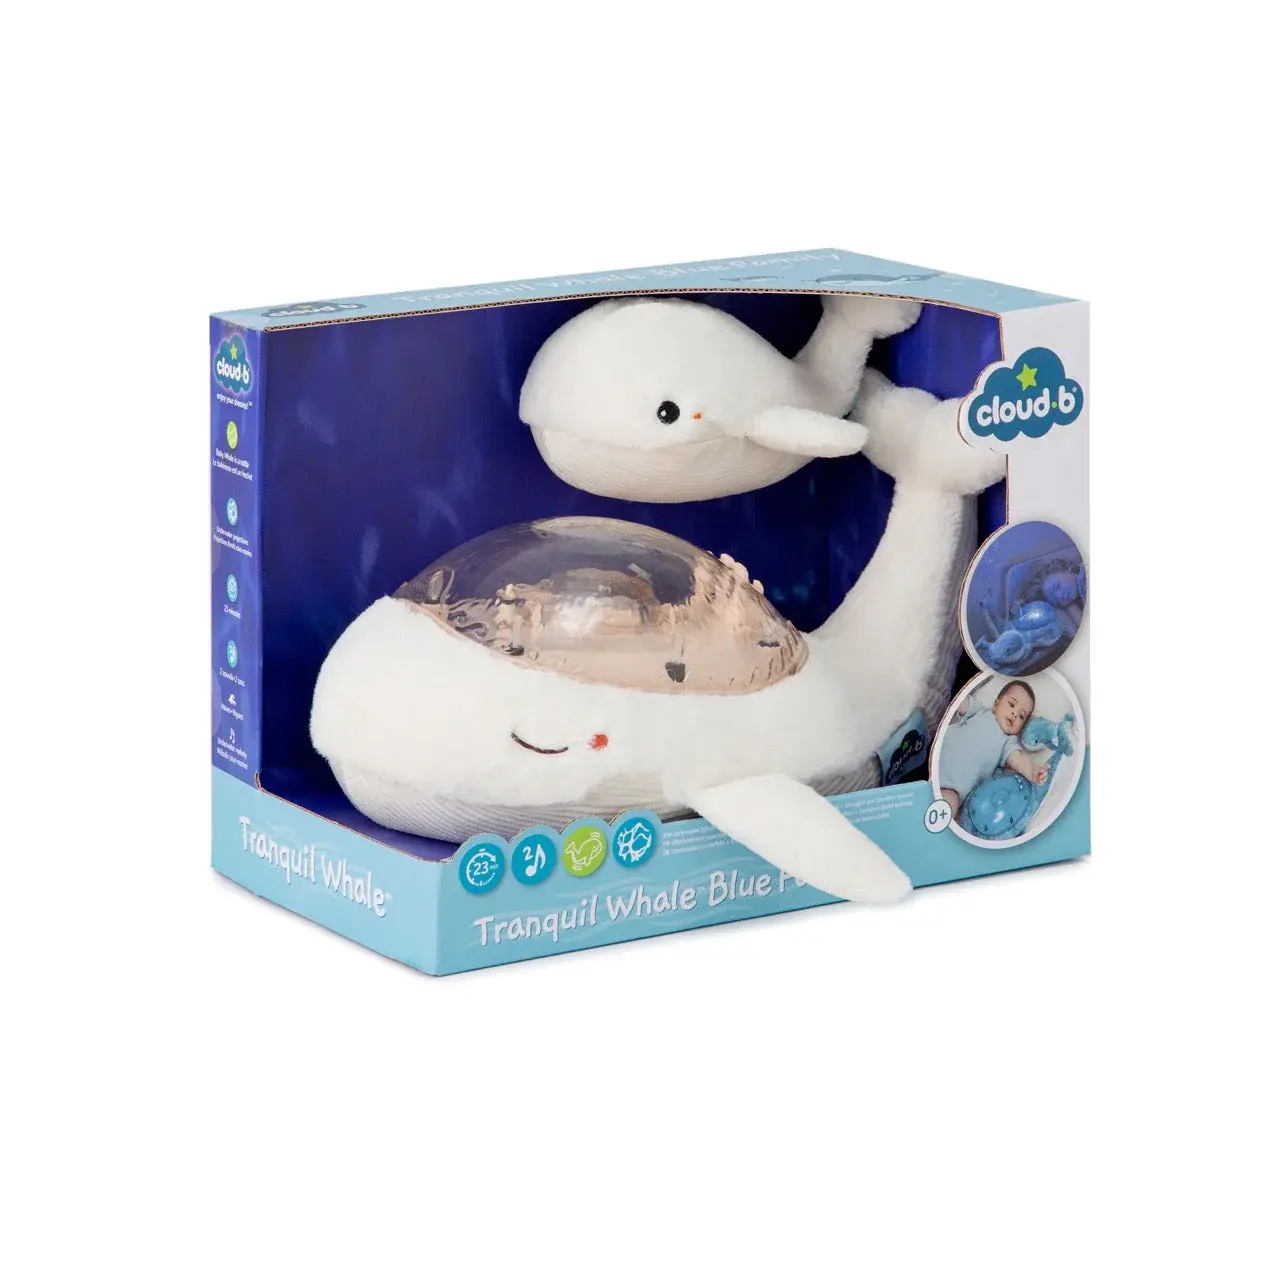 Veilleuse bébé baleine Mona rechargeable - Jolie Veilleuse